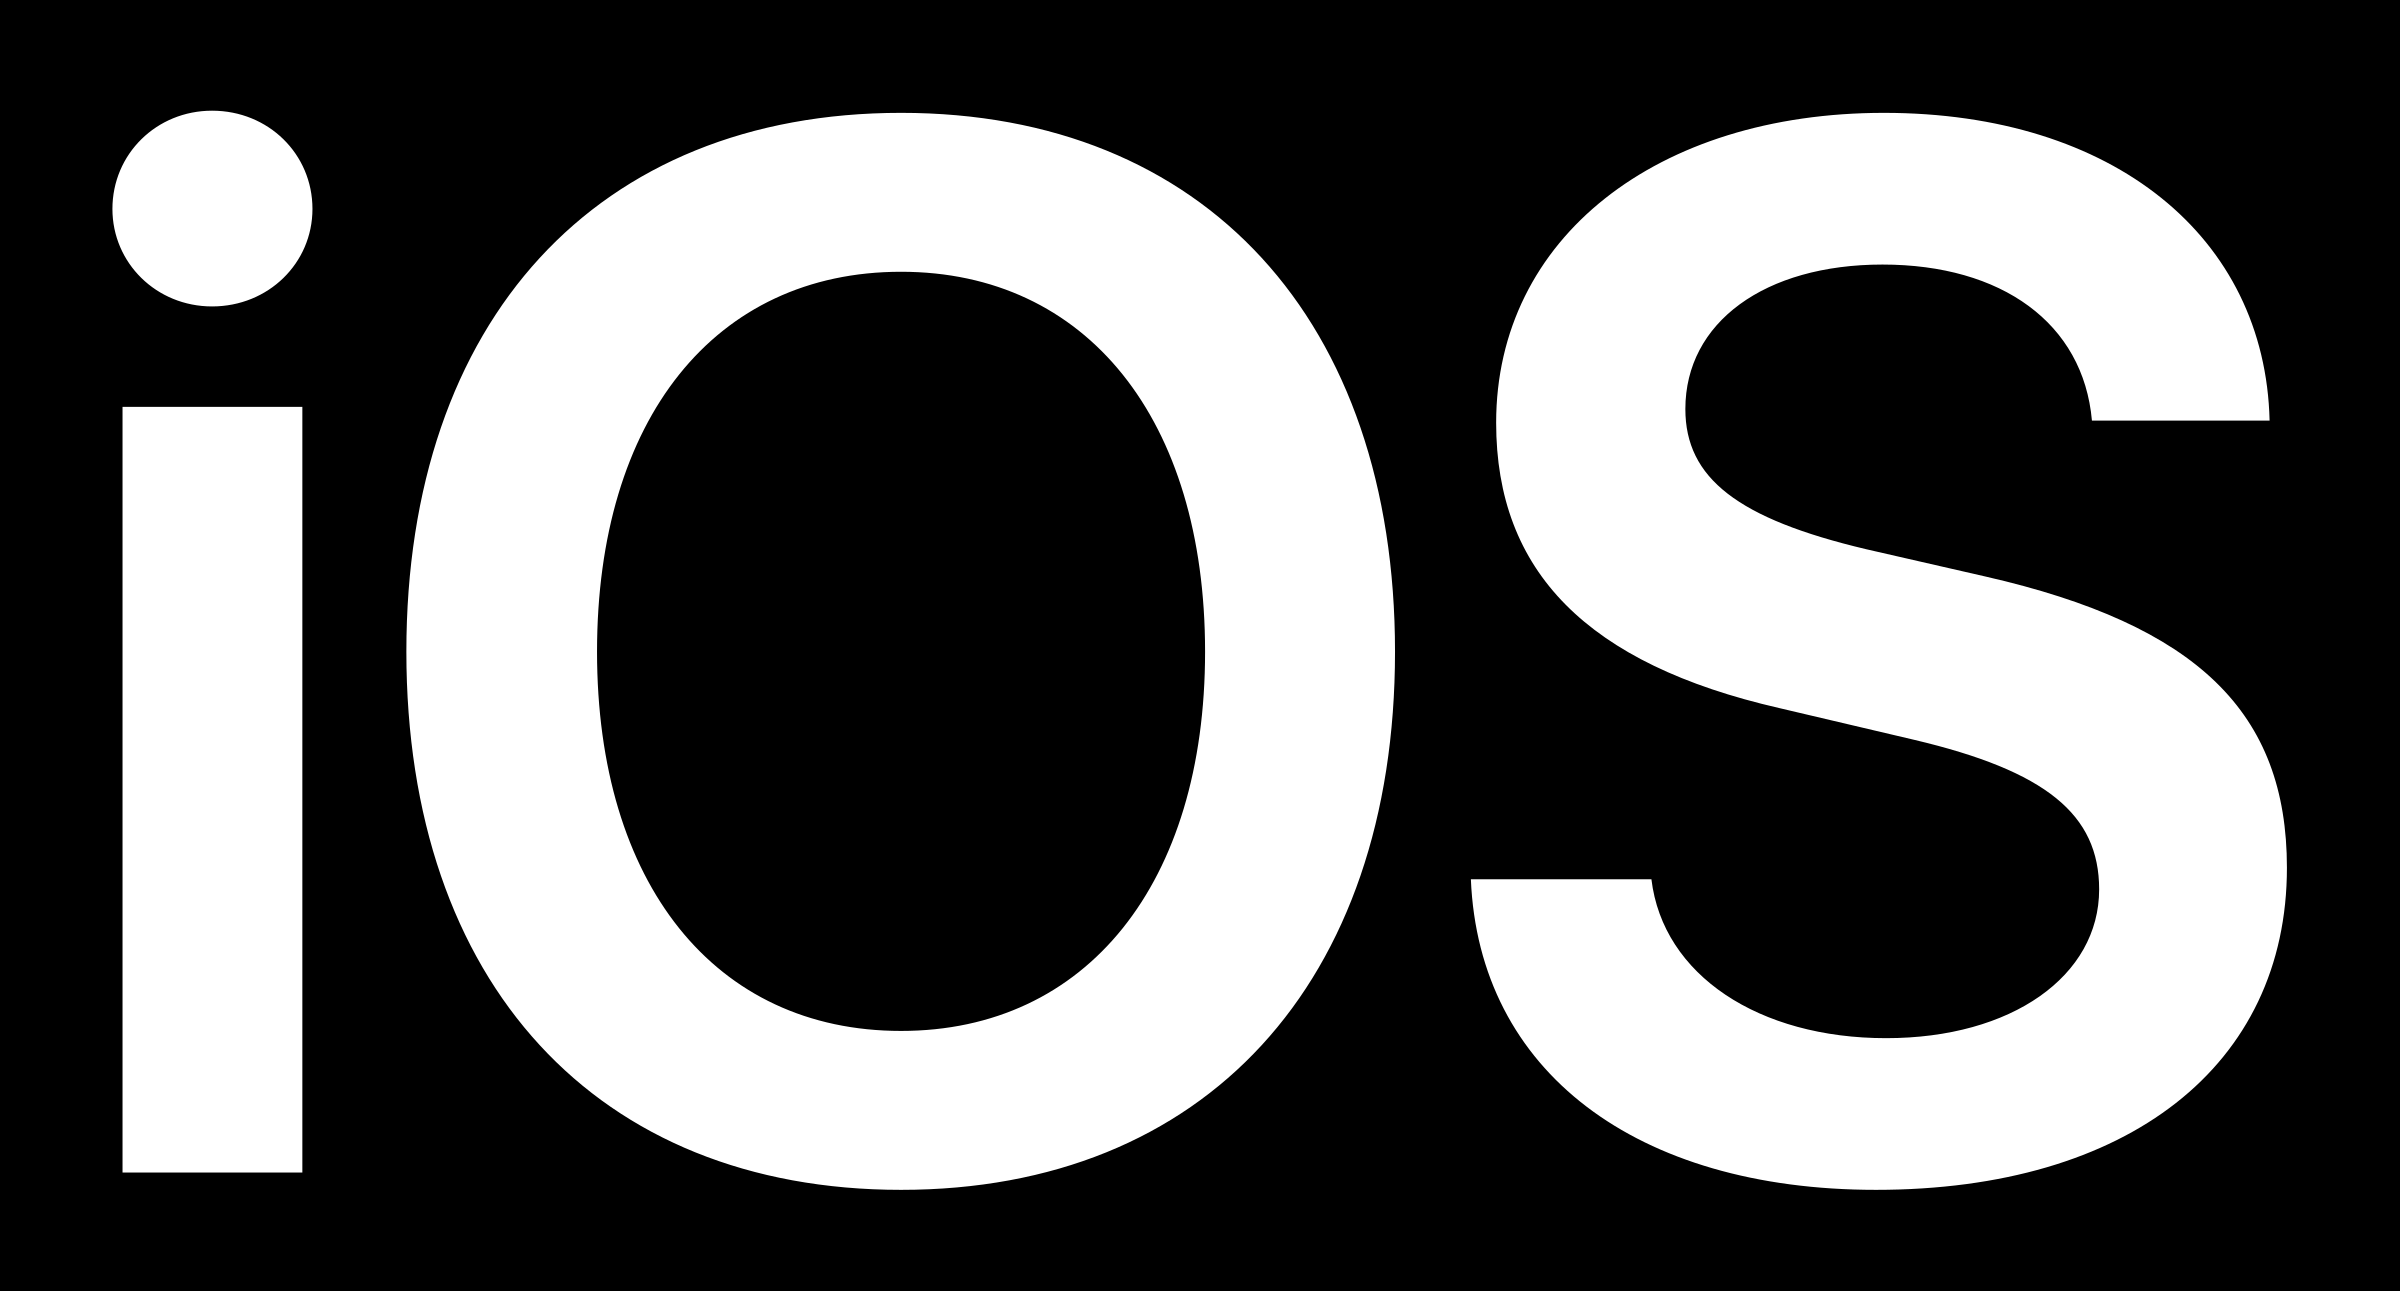 Black and White iOS Logo - iOS Logo PNG Transparent & SVG Vector